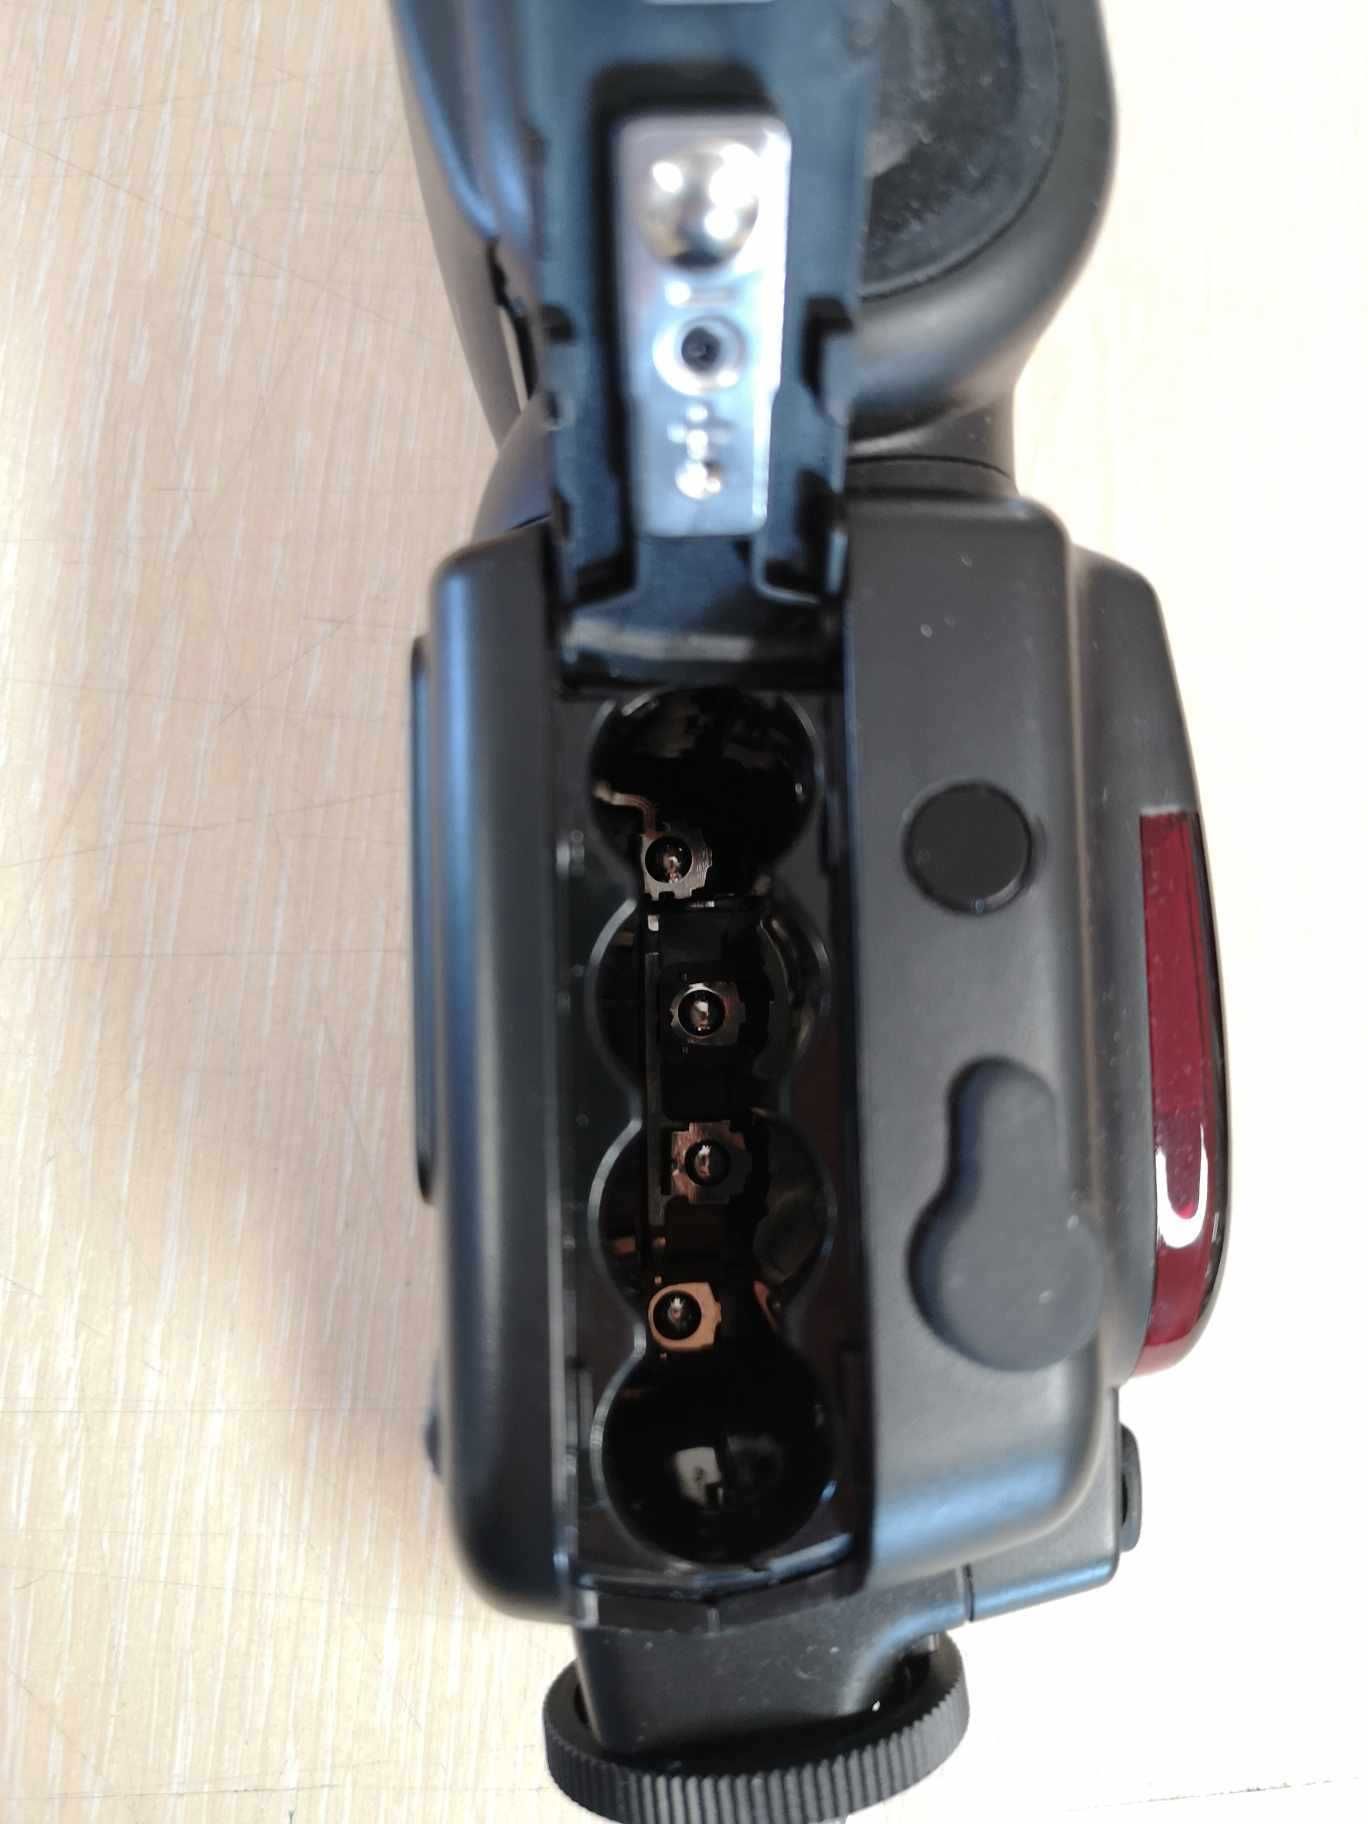 Светкавица Nikon - Neewer 750ii TTL - за части (или лек ремонт)